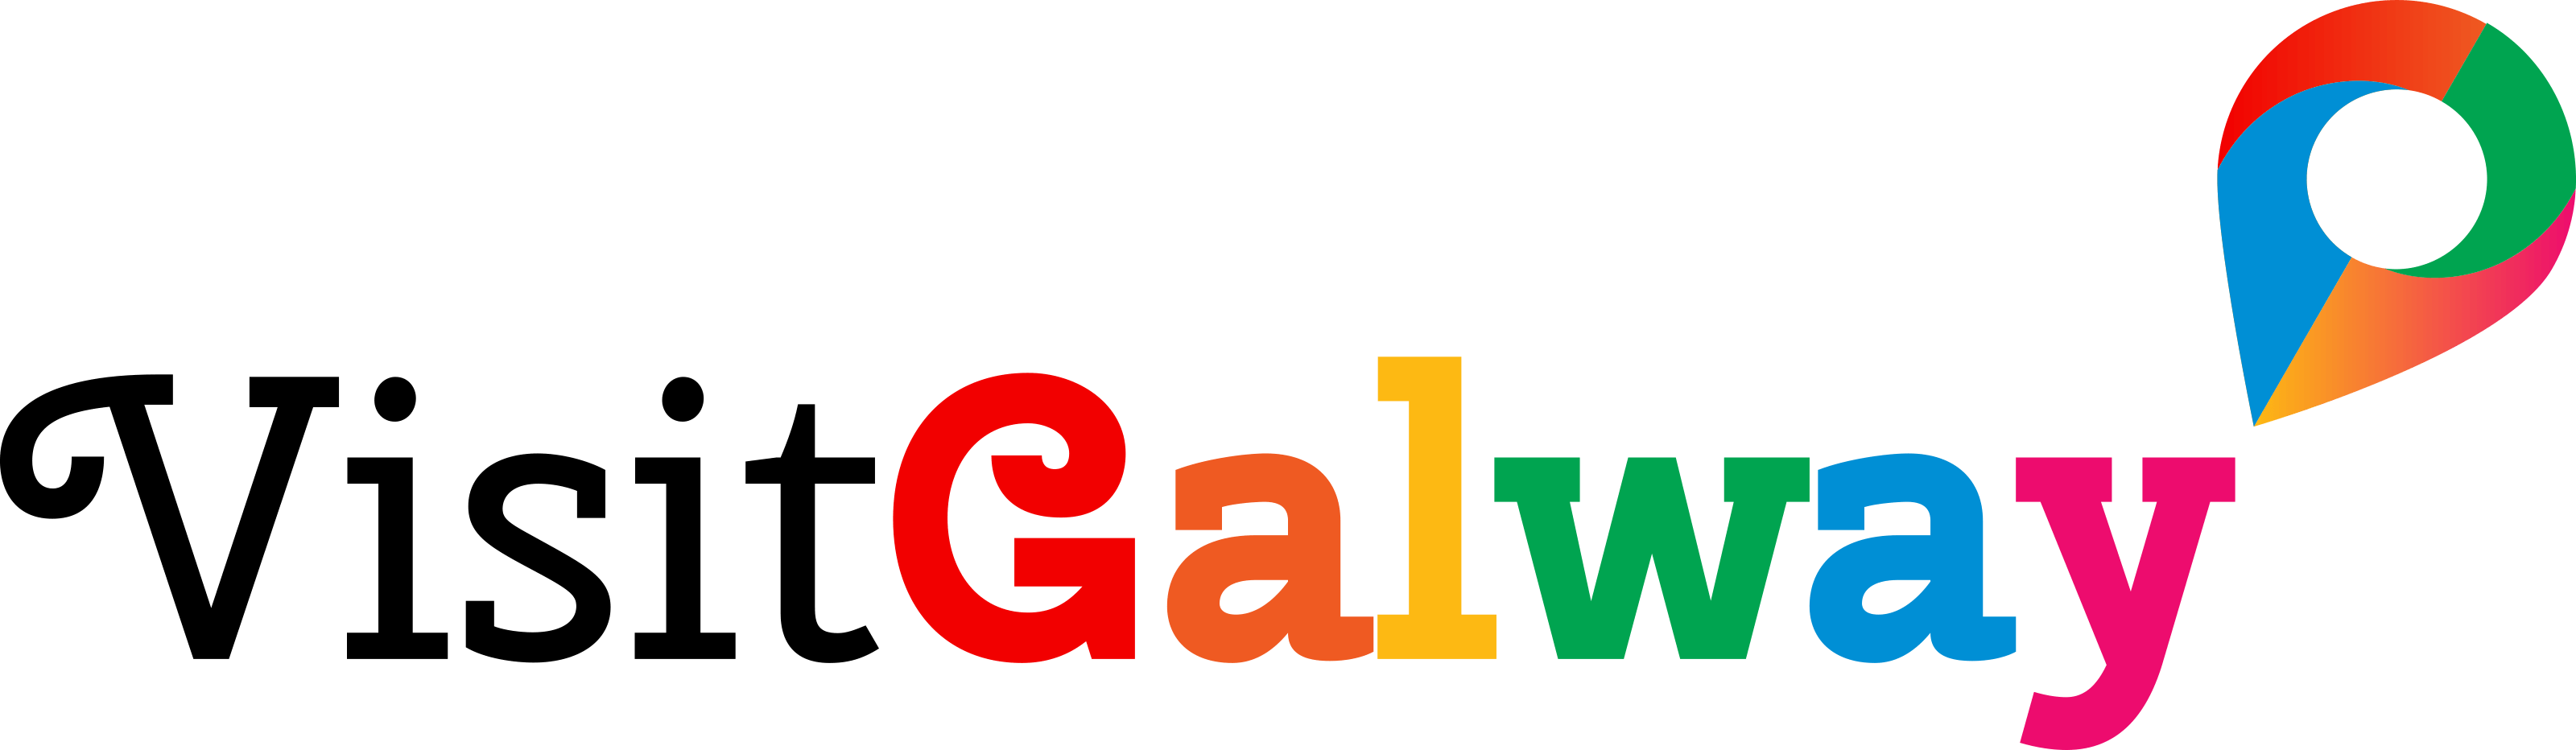 Galway Logo - Galway | Connemara | Aran Islands | Galway County | Guide to Galway